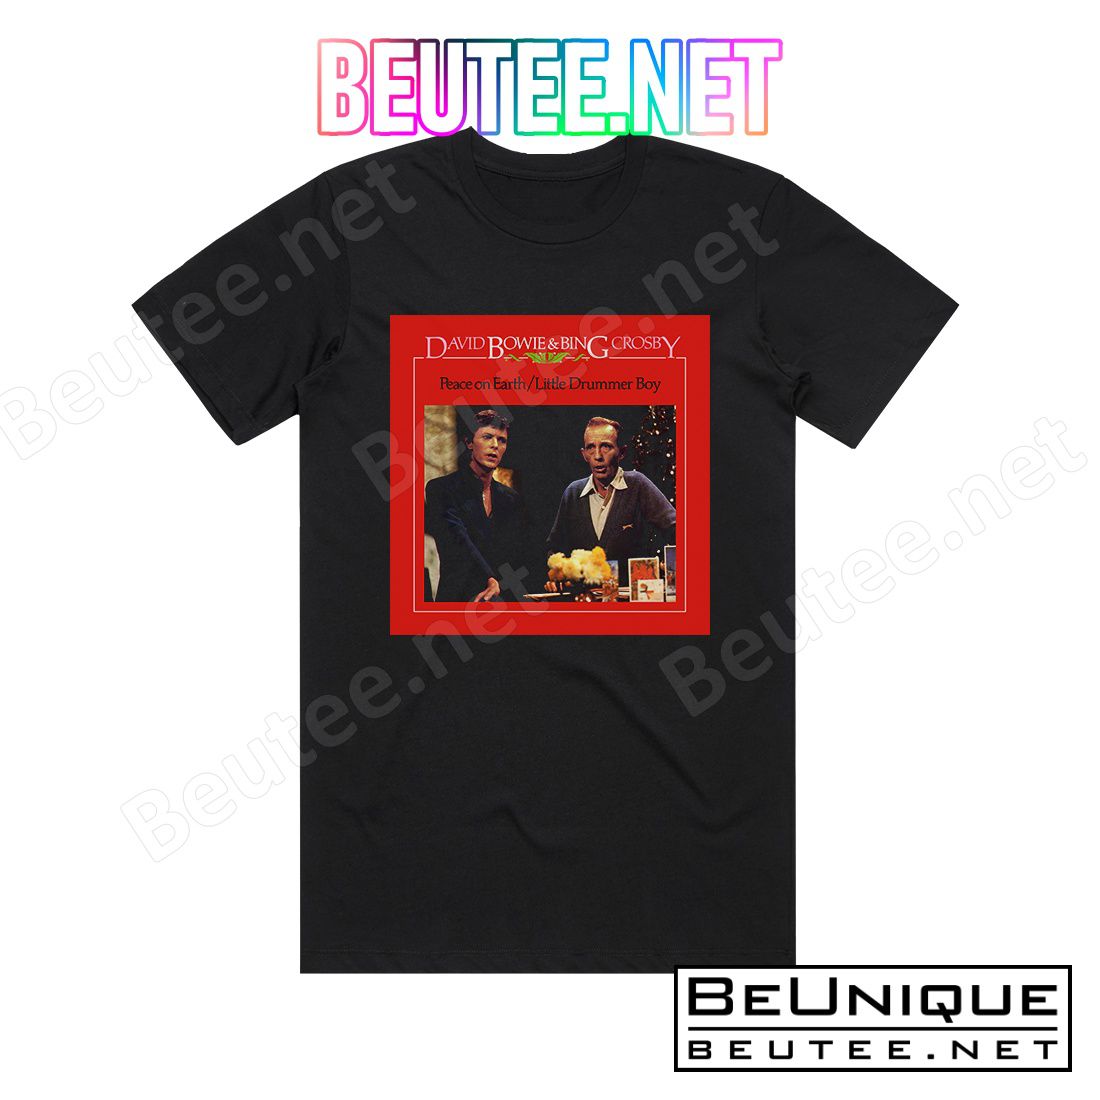 Bing Crosby Peace On Earth Little Drummer Boy Album Cover T-Shirt